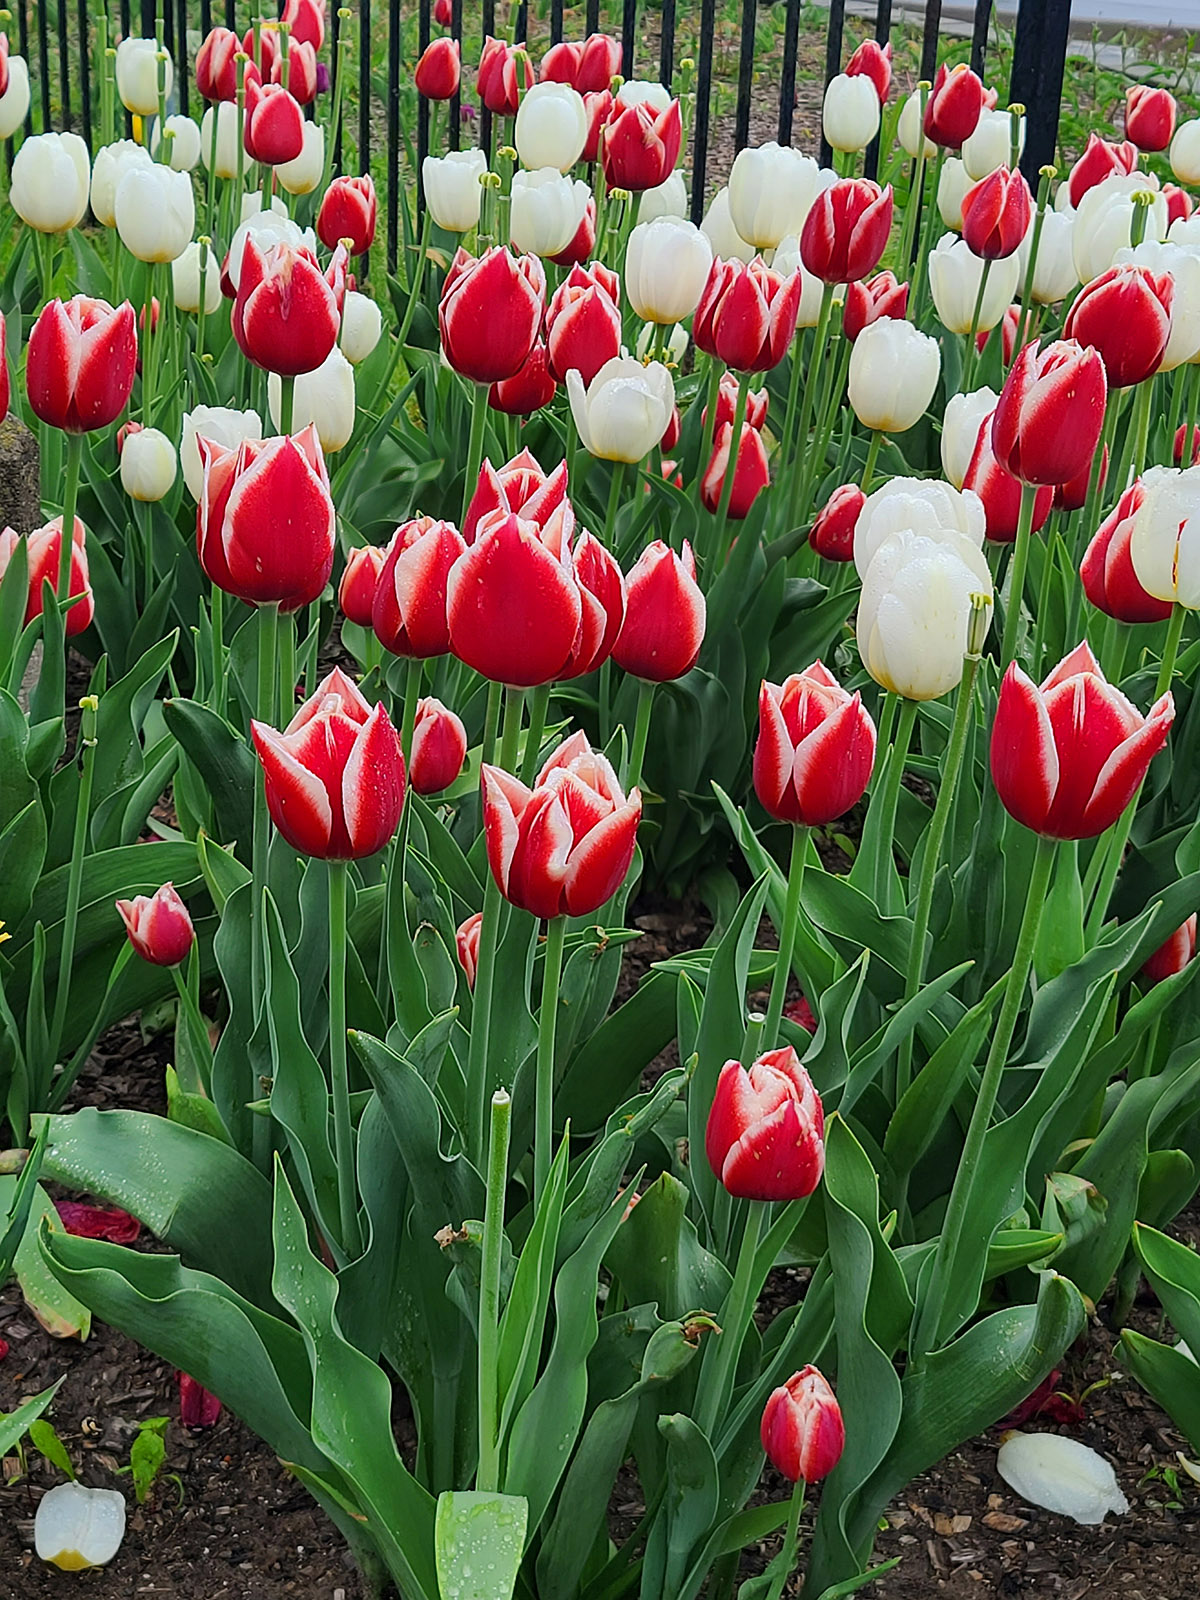 Red and white tulips at Niagara Falls.